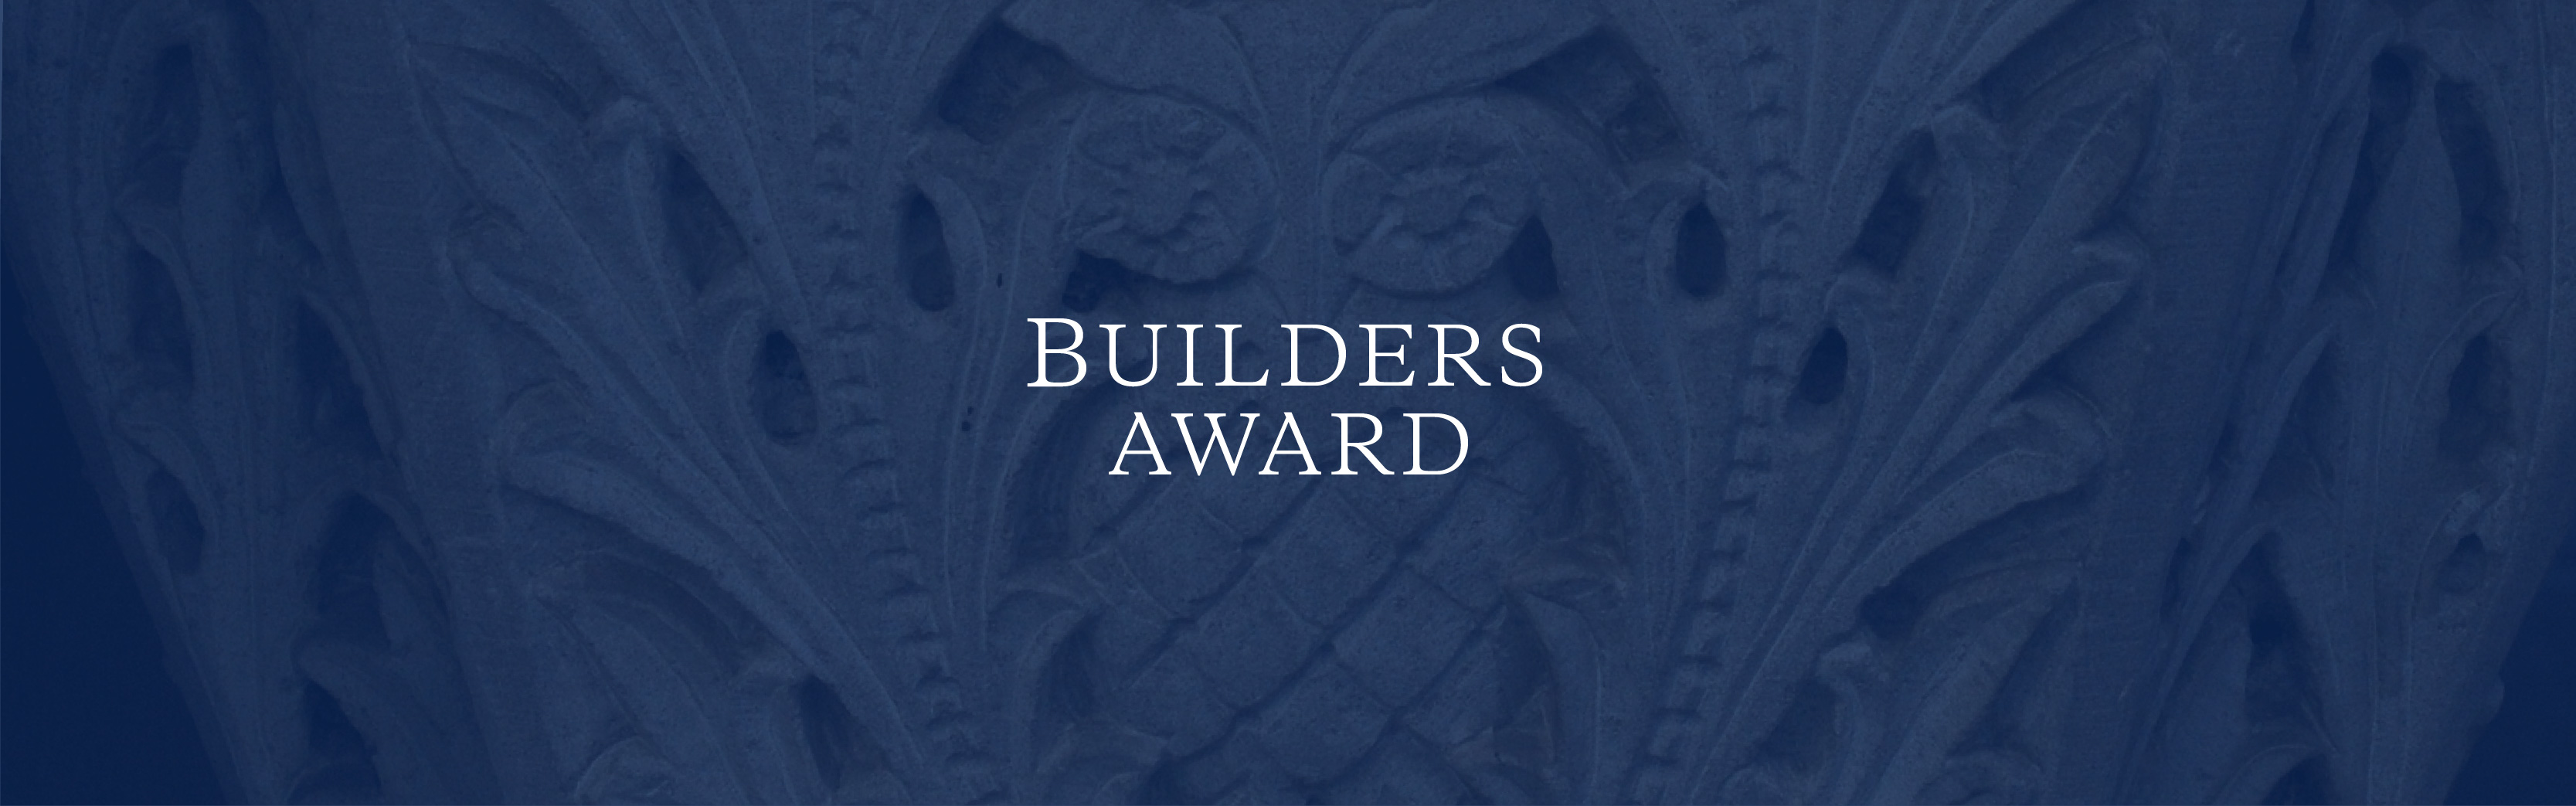 Builders Awards